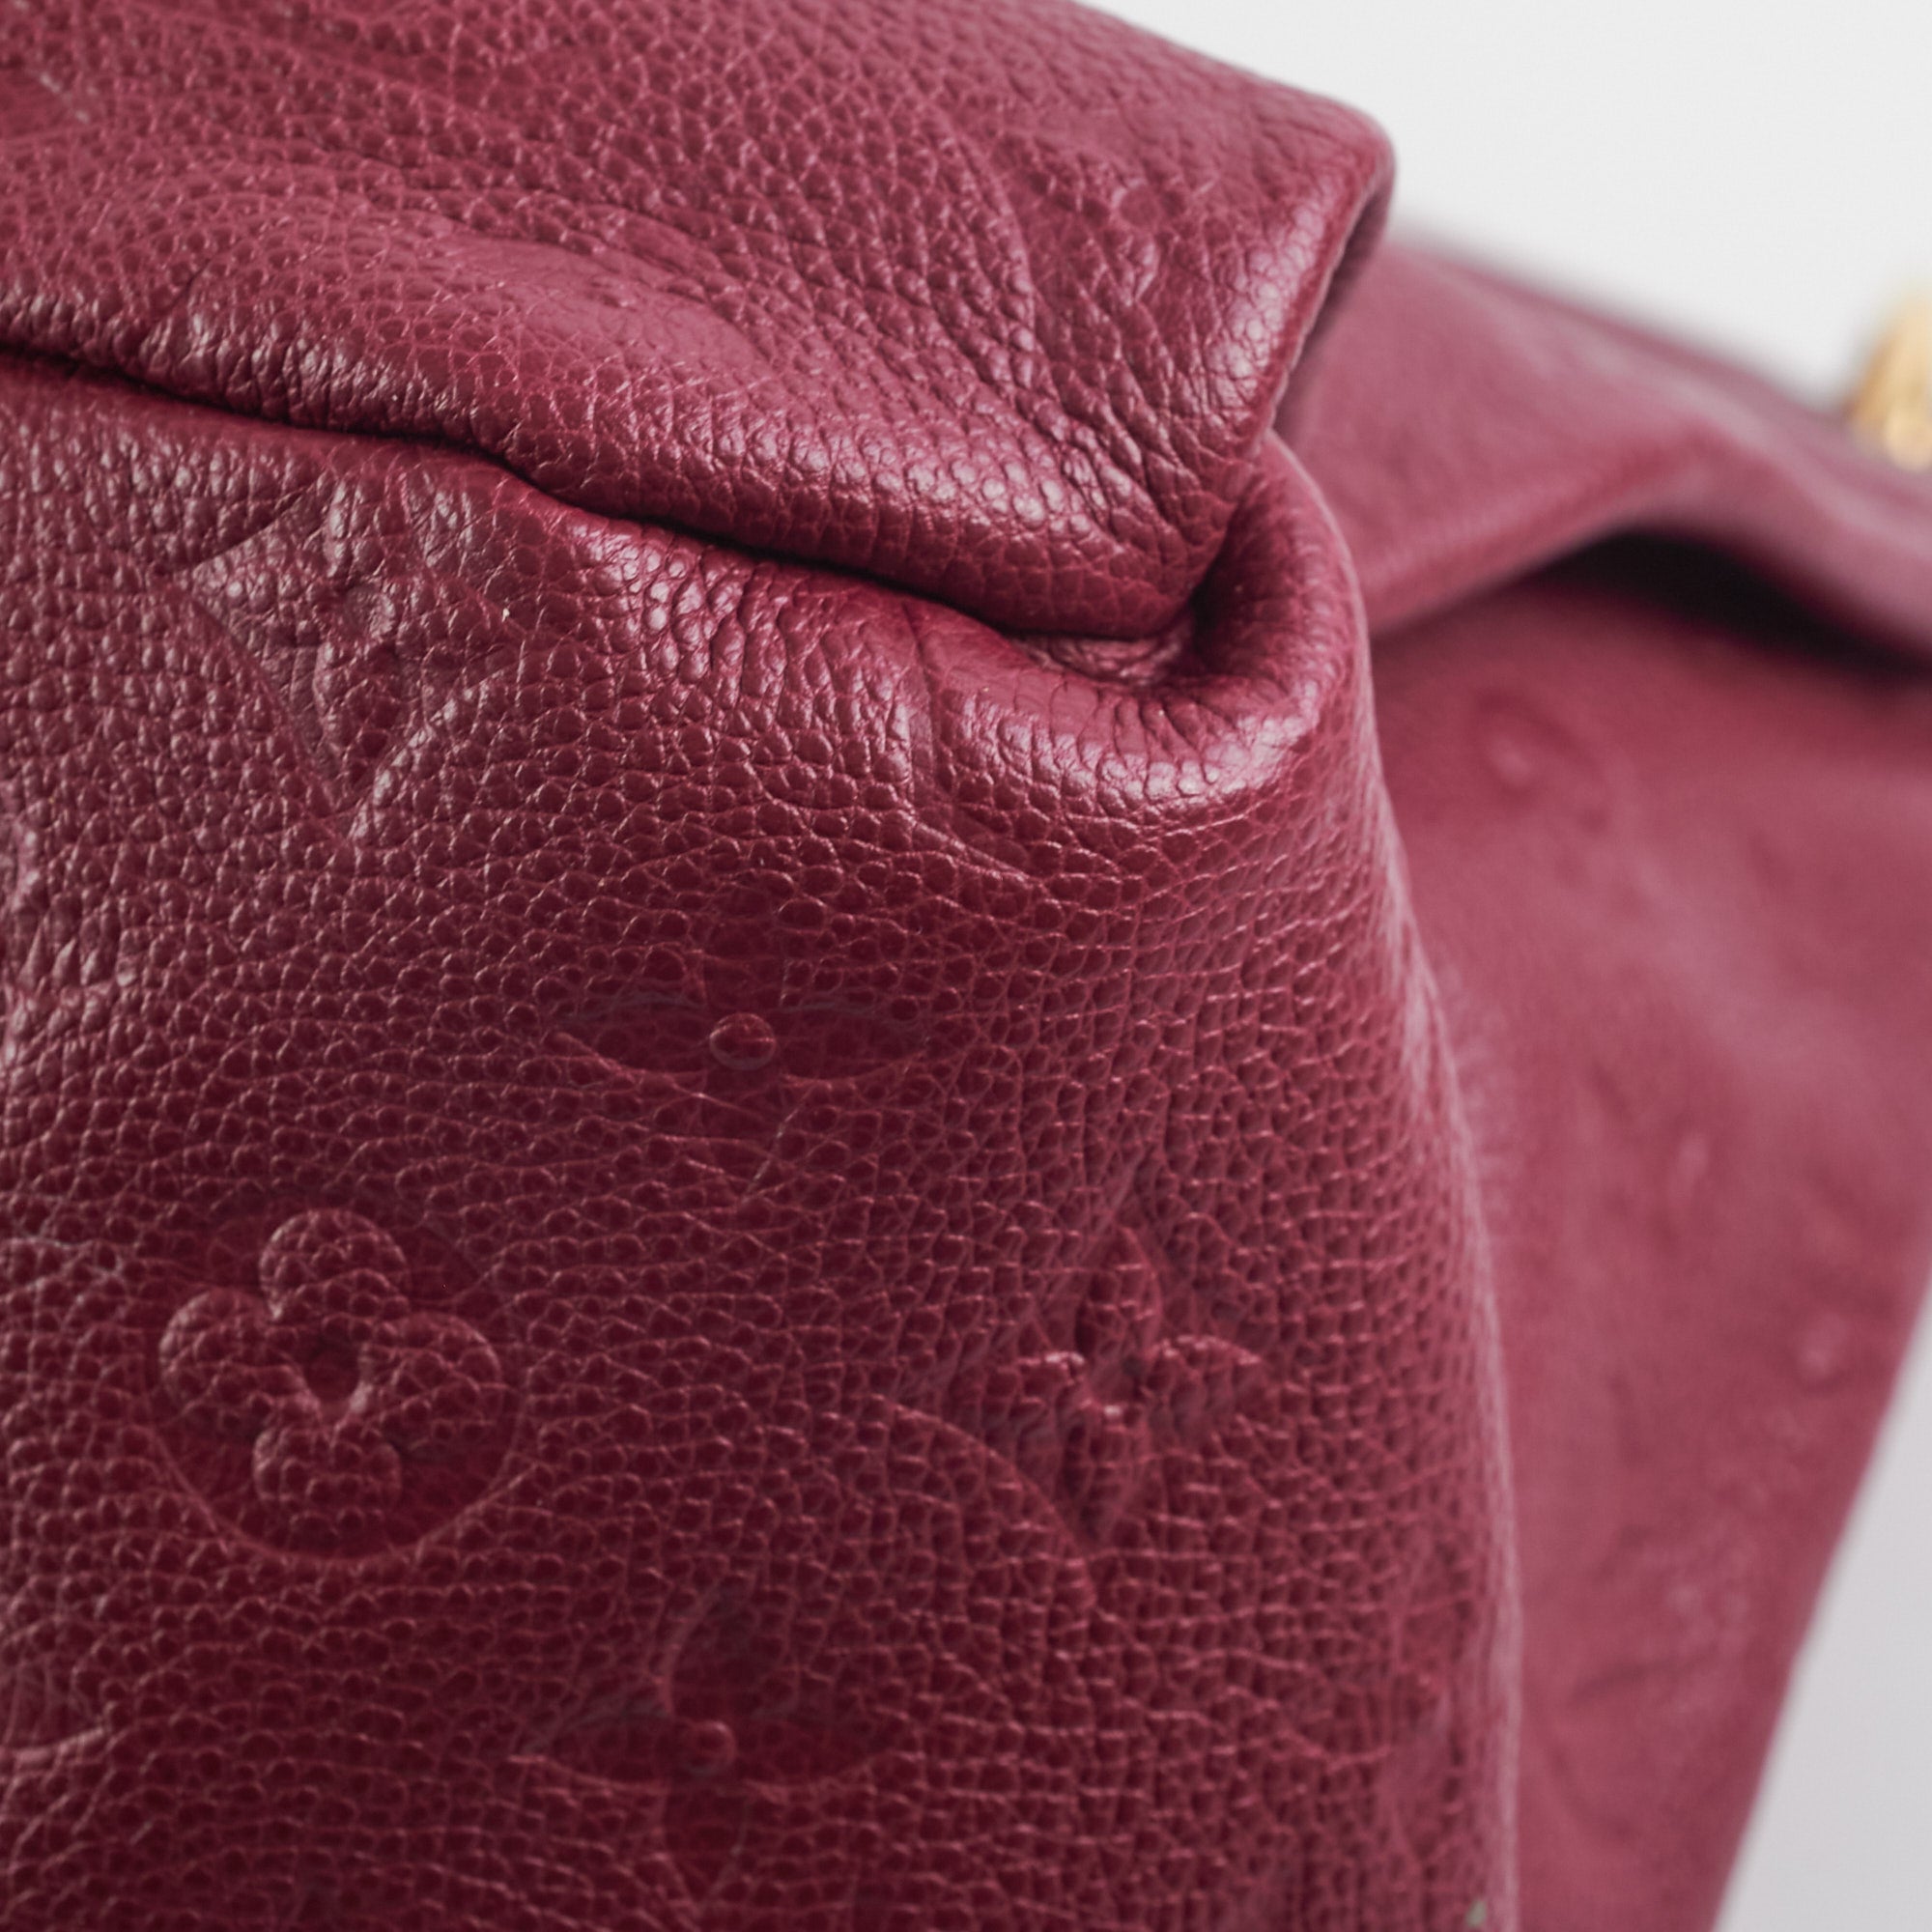 Louis Vuitton Burgundy Empreinte Leather Artsy MM Bag Louis